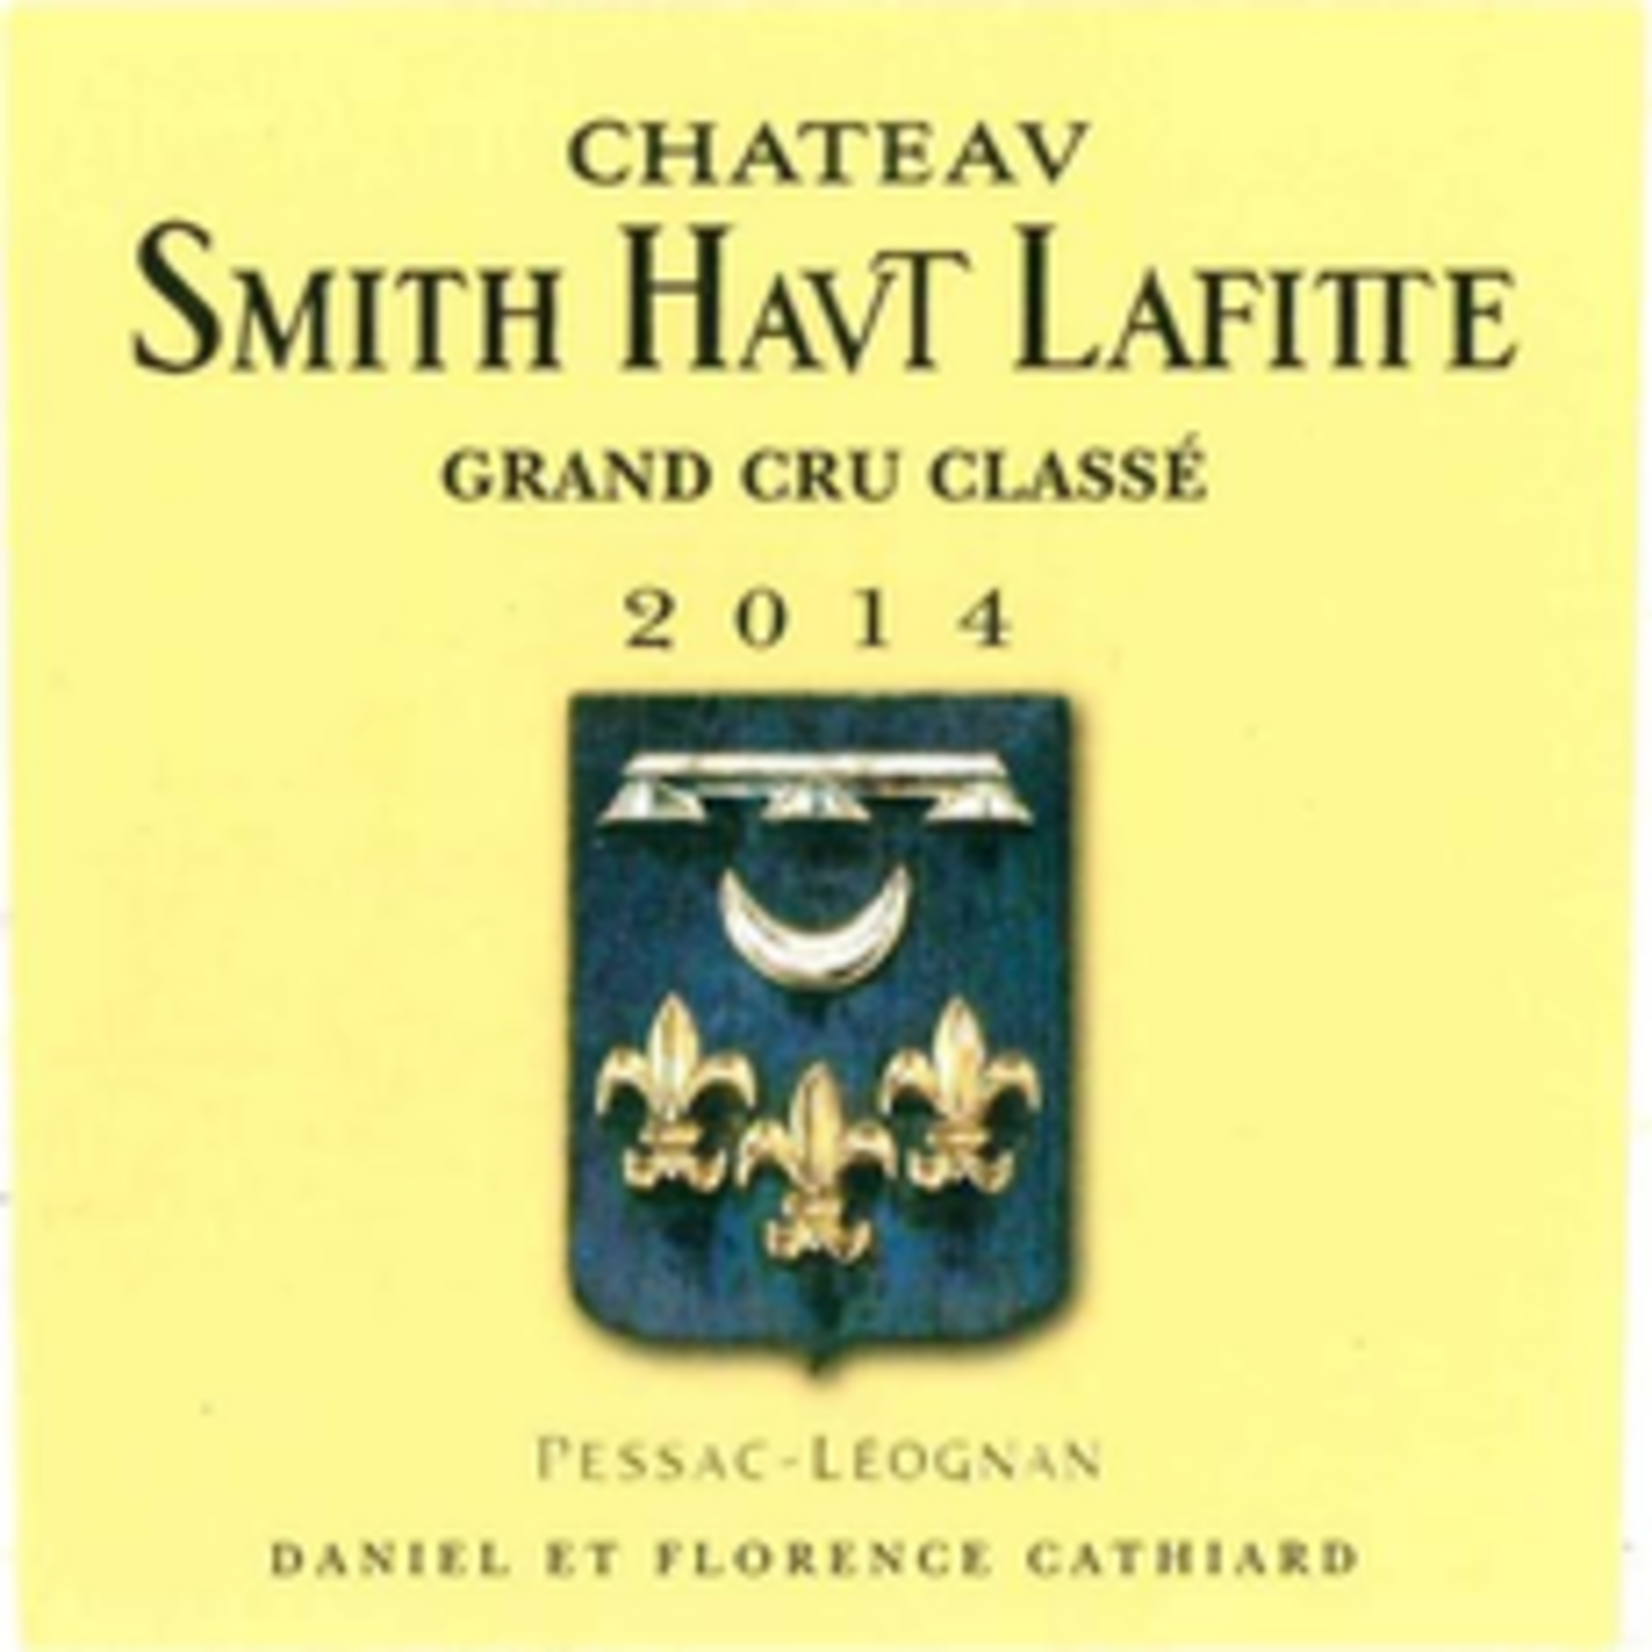 Wine Chateau Smith Haut Lafitte 2014